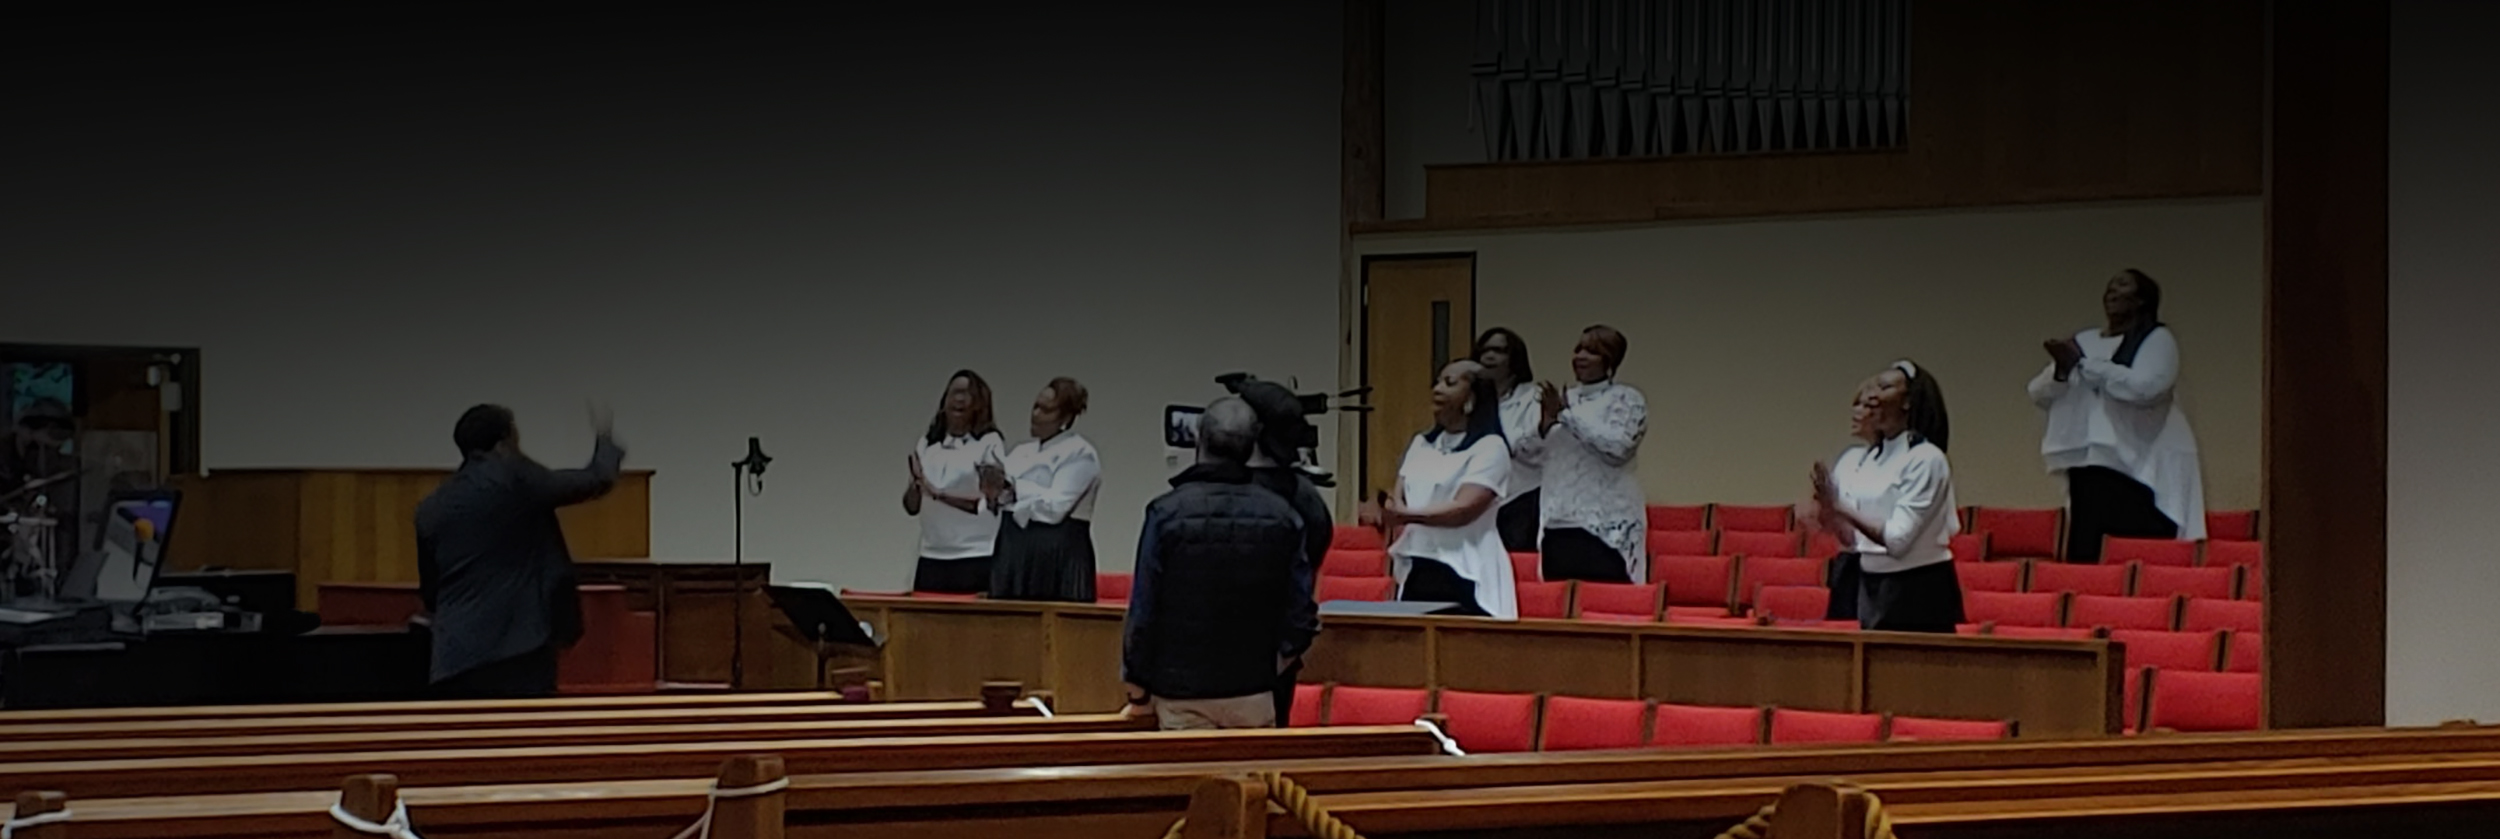  gospel choir performing at MLK celebration  